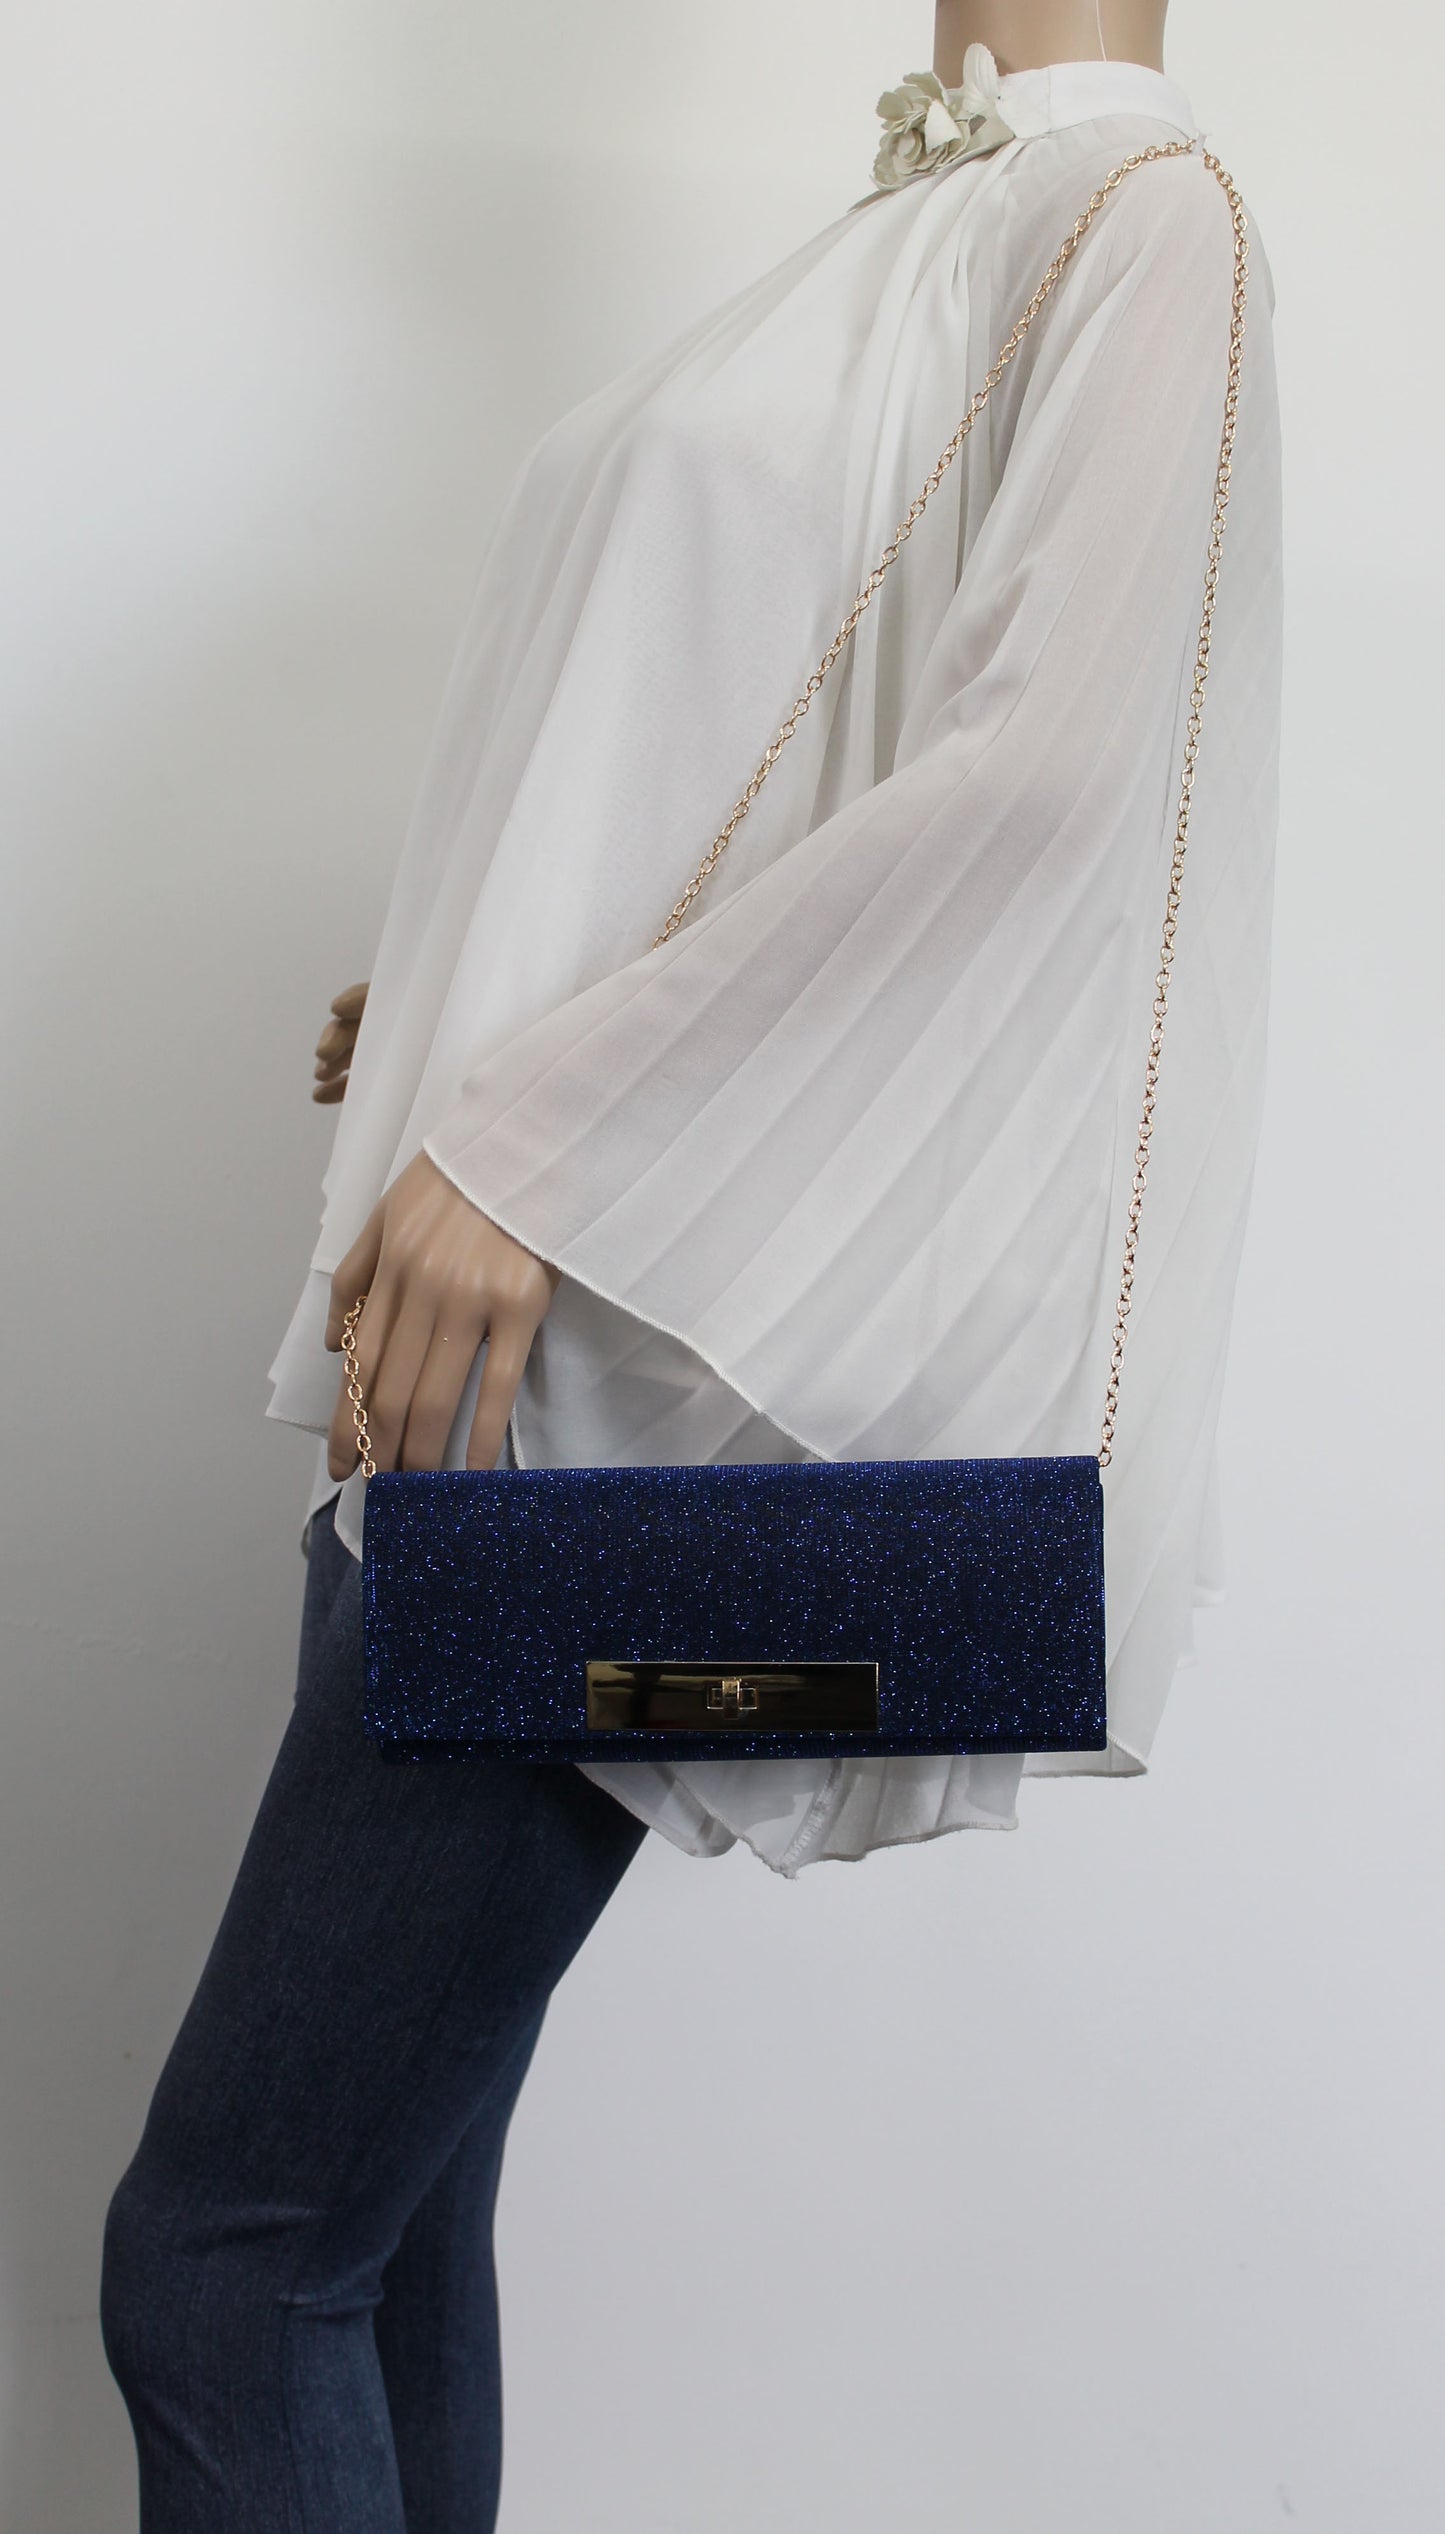 SWANKYSWANS Janet Glitter Clutch Bag Royal Blue Cute Cheap Clutch Bag For Weddings School and Work